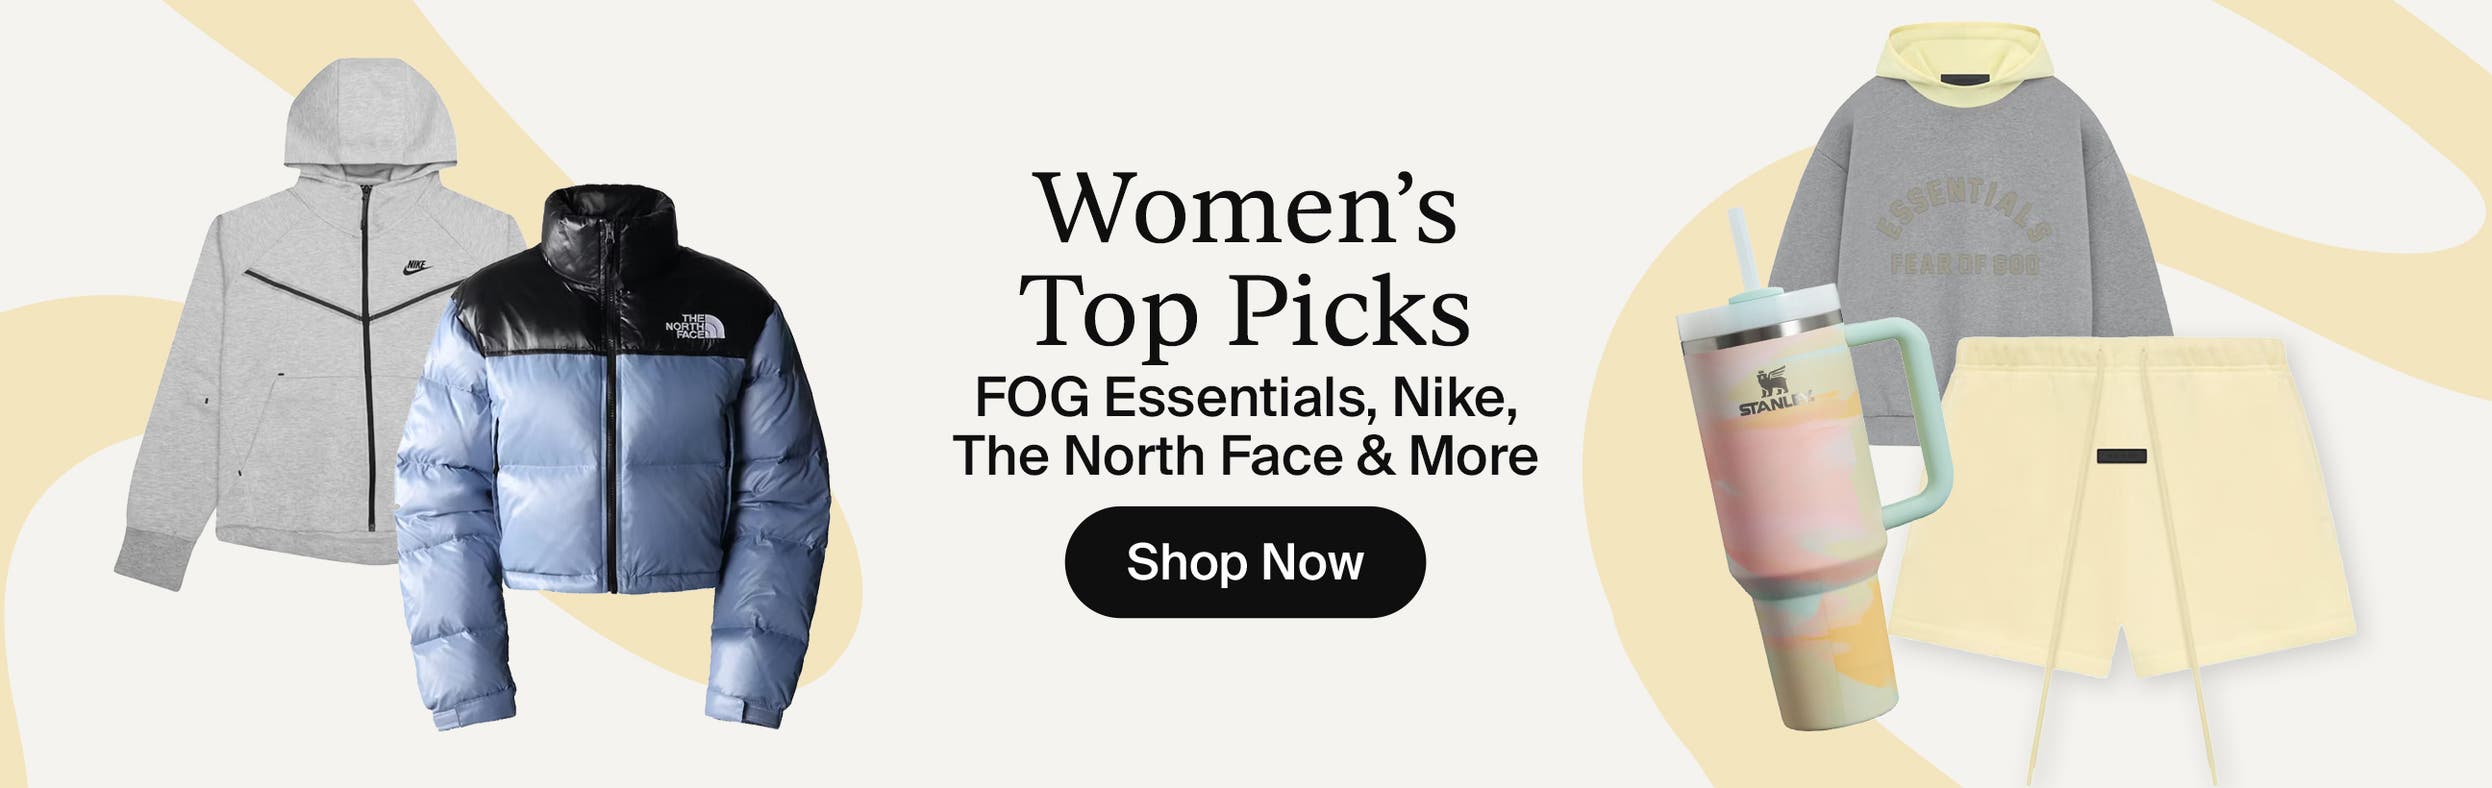 Women_s_Best_Sellers_feat._Nike_Tech_Fleece_FOG_Essentials_etc._Primary_Desktop_copy.jpg